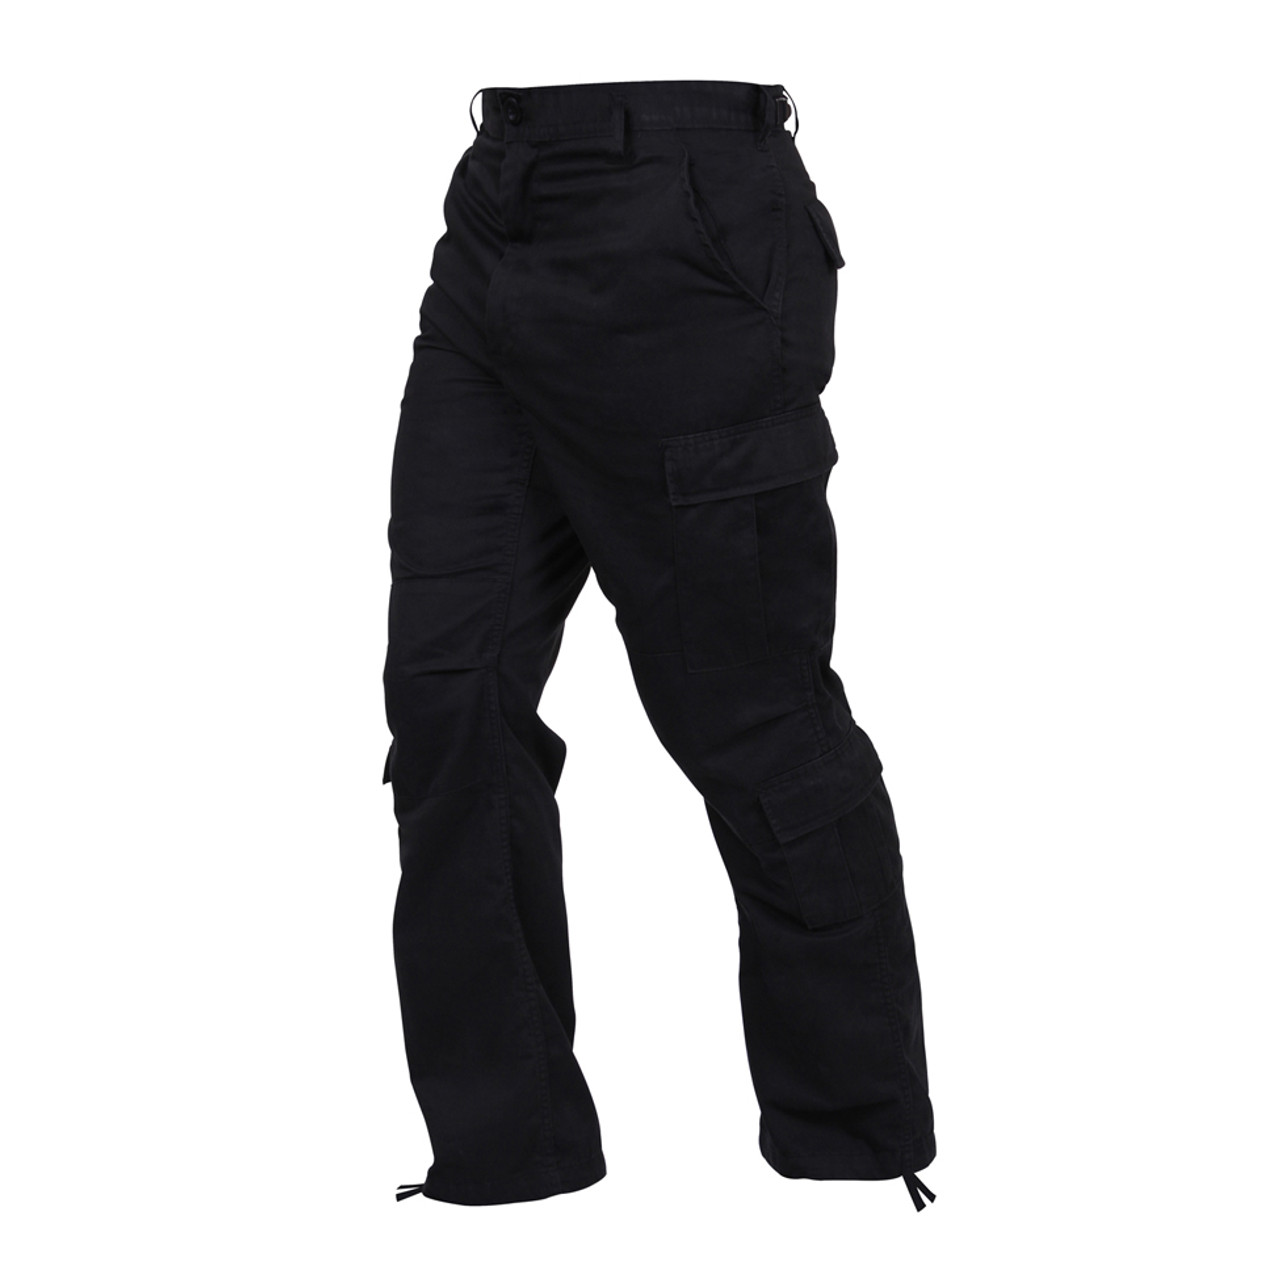 Shop Vintage Black Paratrooper Pants - Fatigues Army Navy Gear